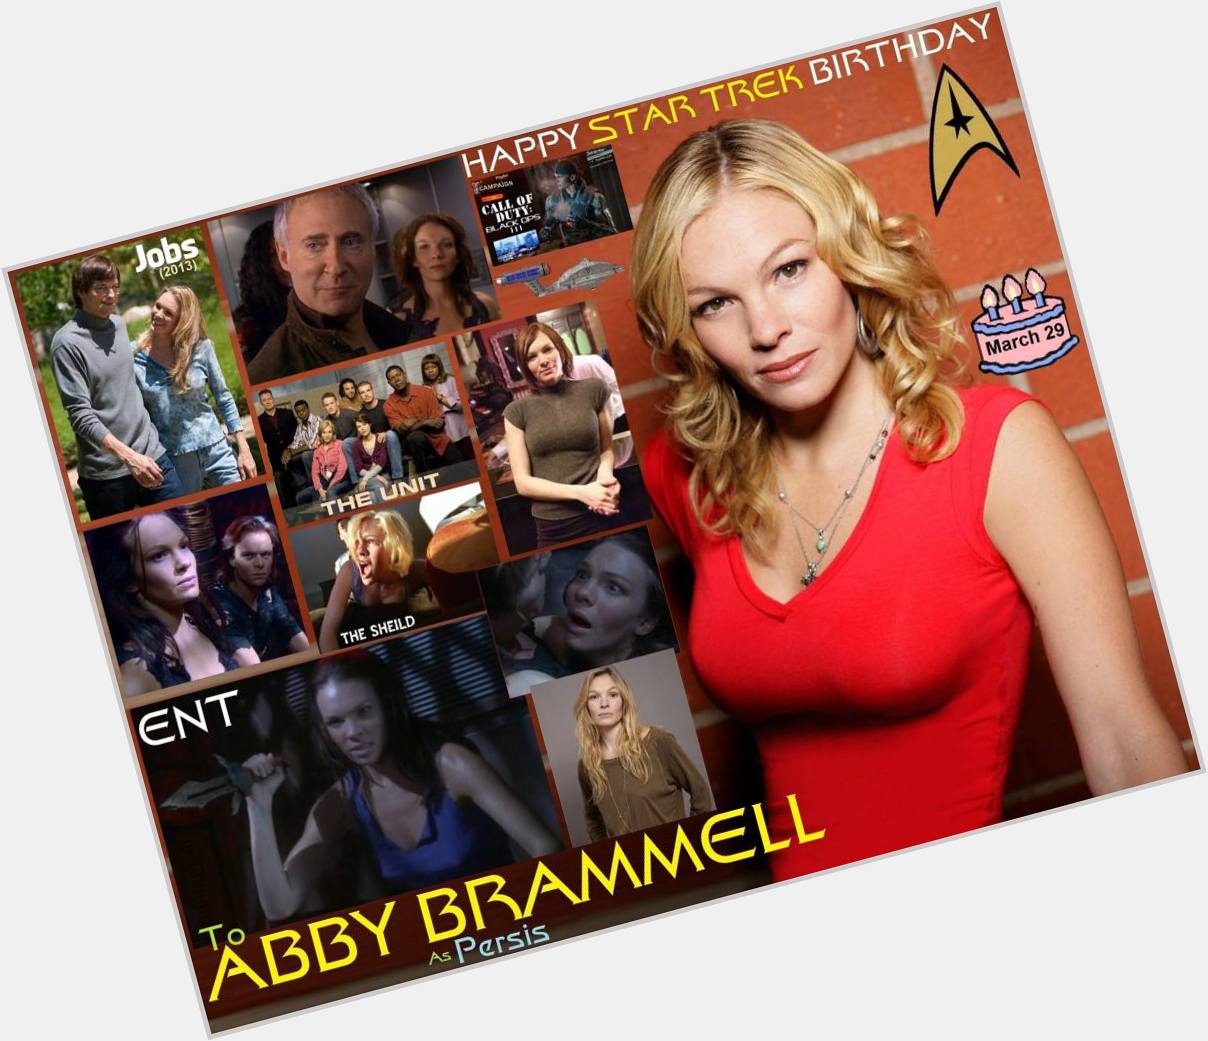 Happy birthday Abby Brammell, born March 19, 1979.  